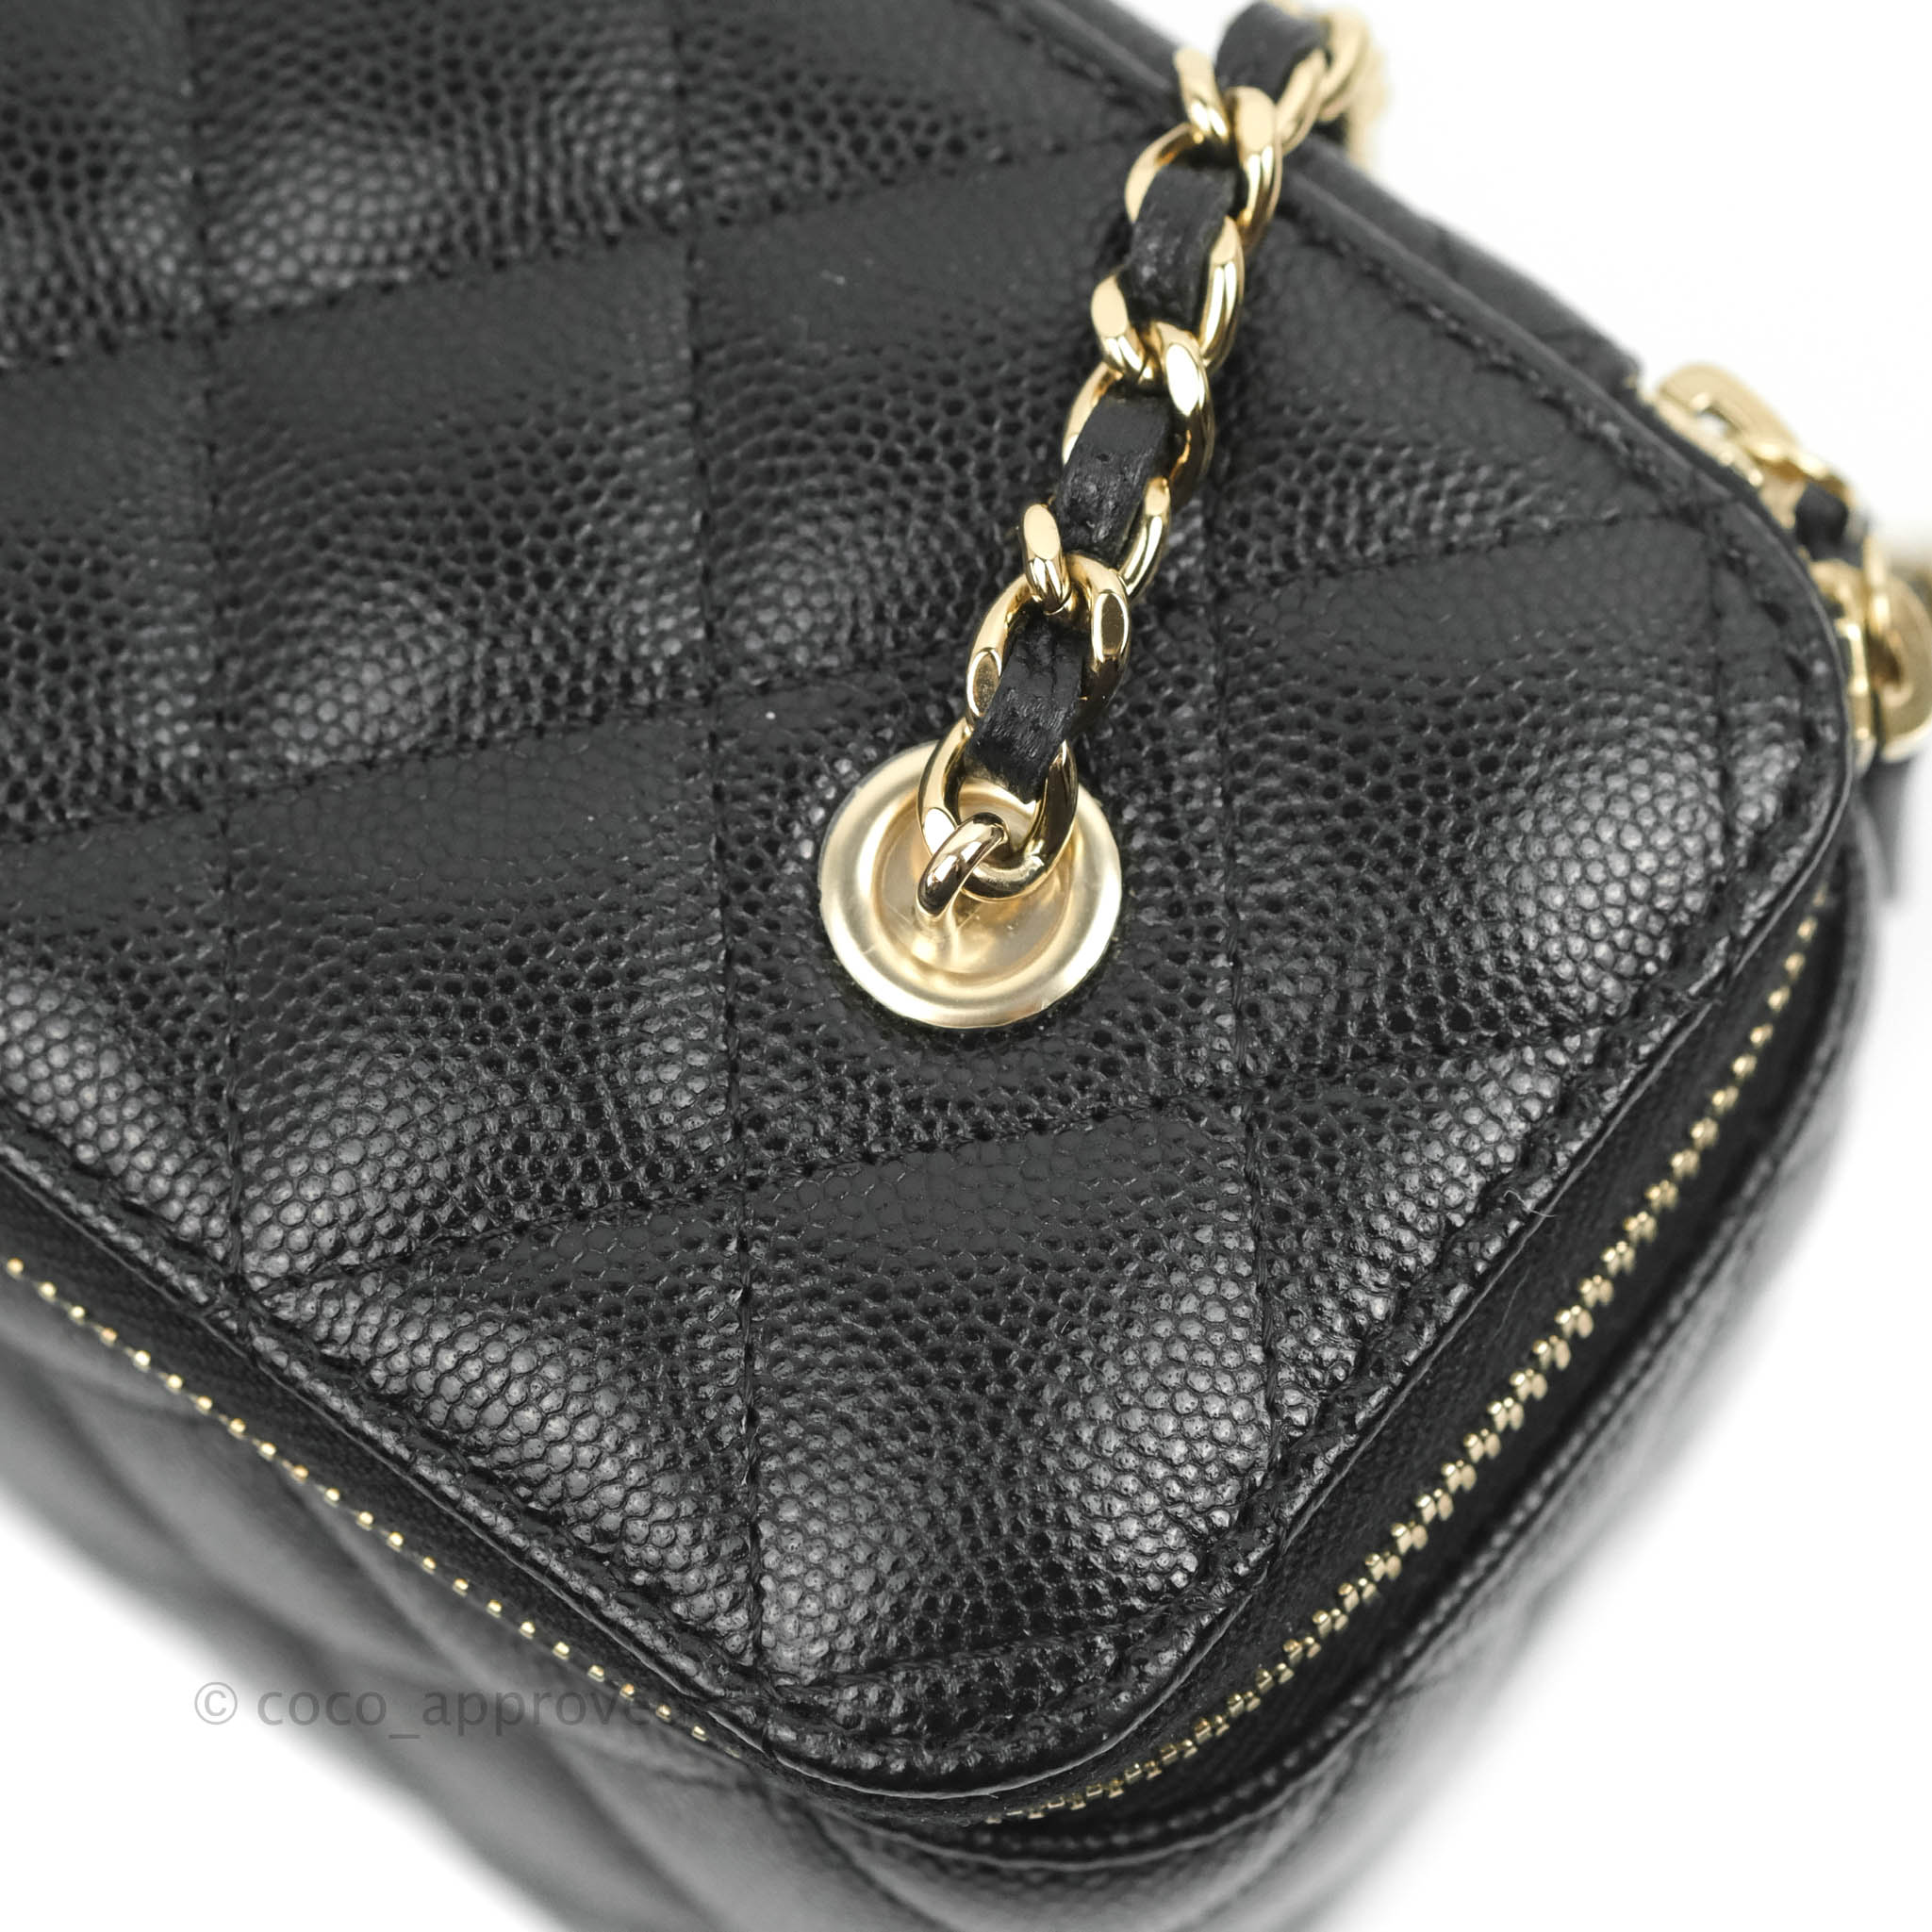 Rare Chanel Vintage Vanity Case Lilac Caviar Leather